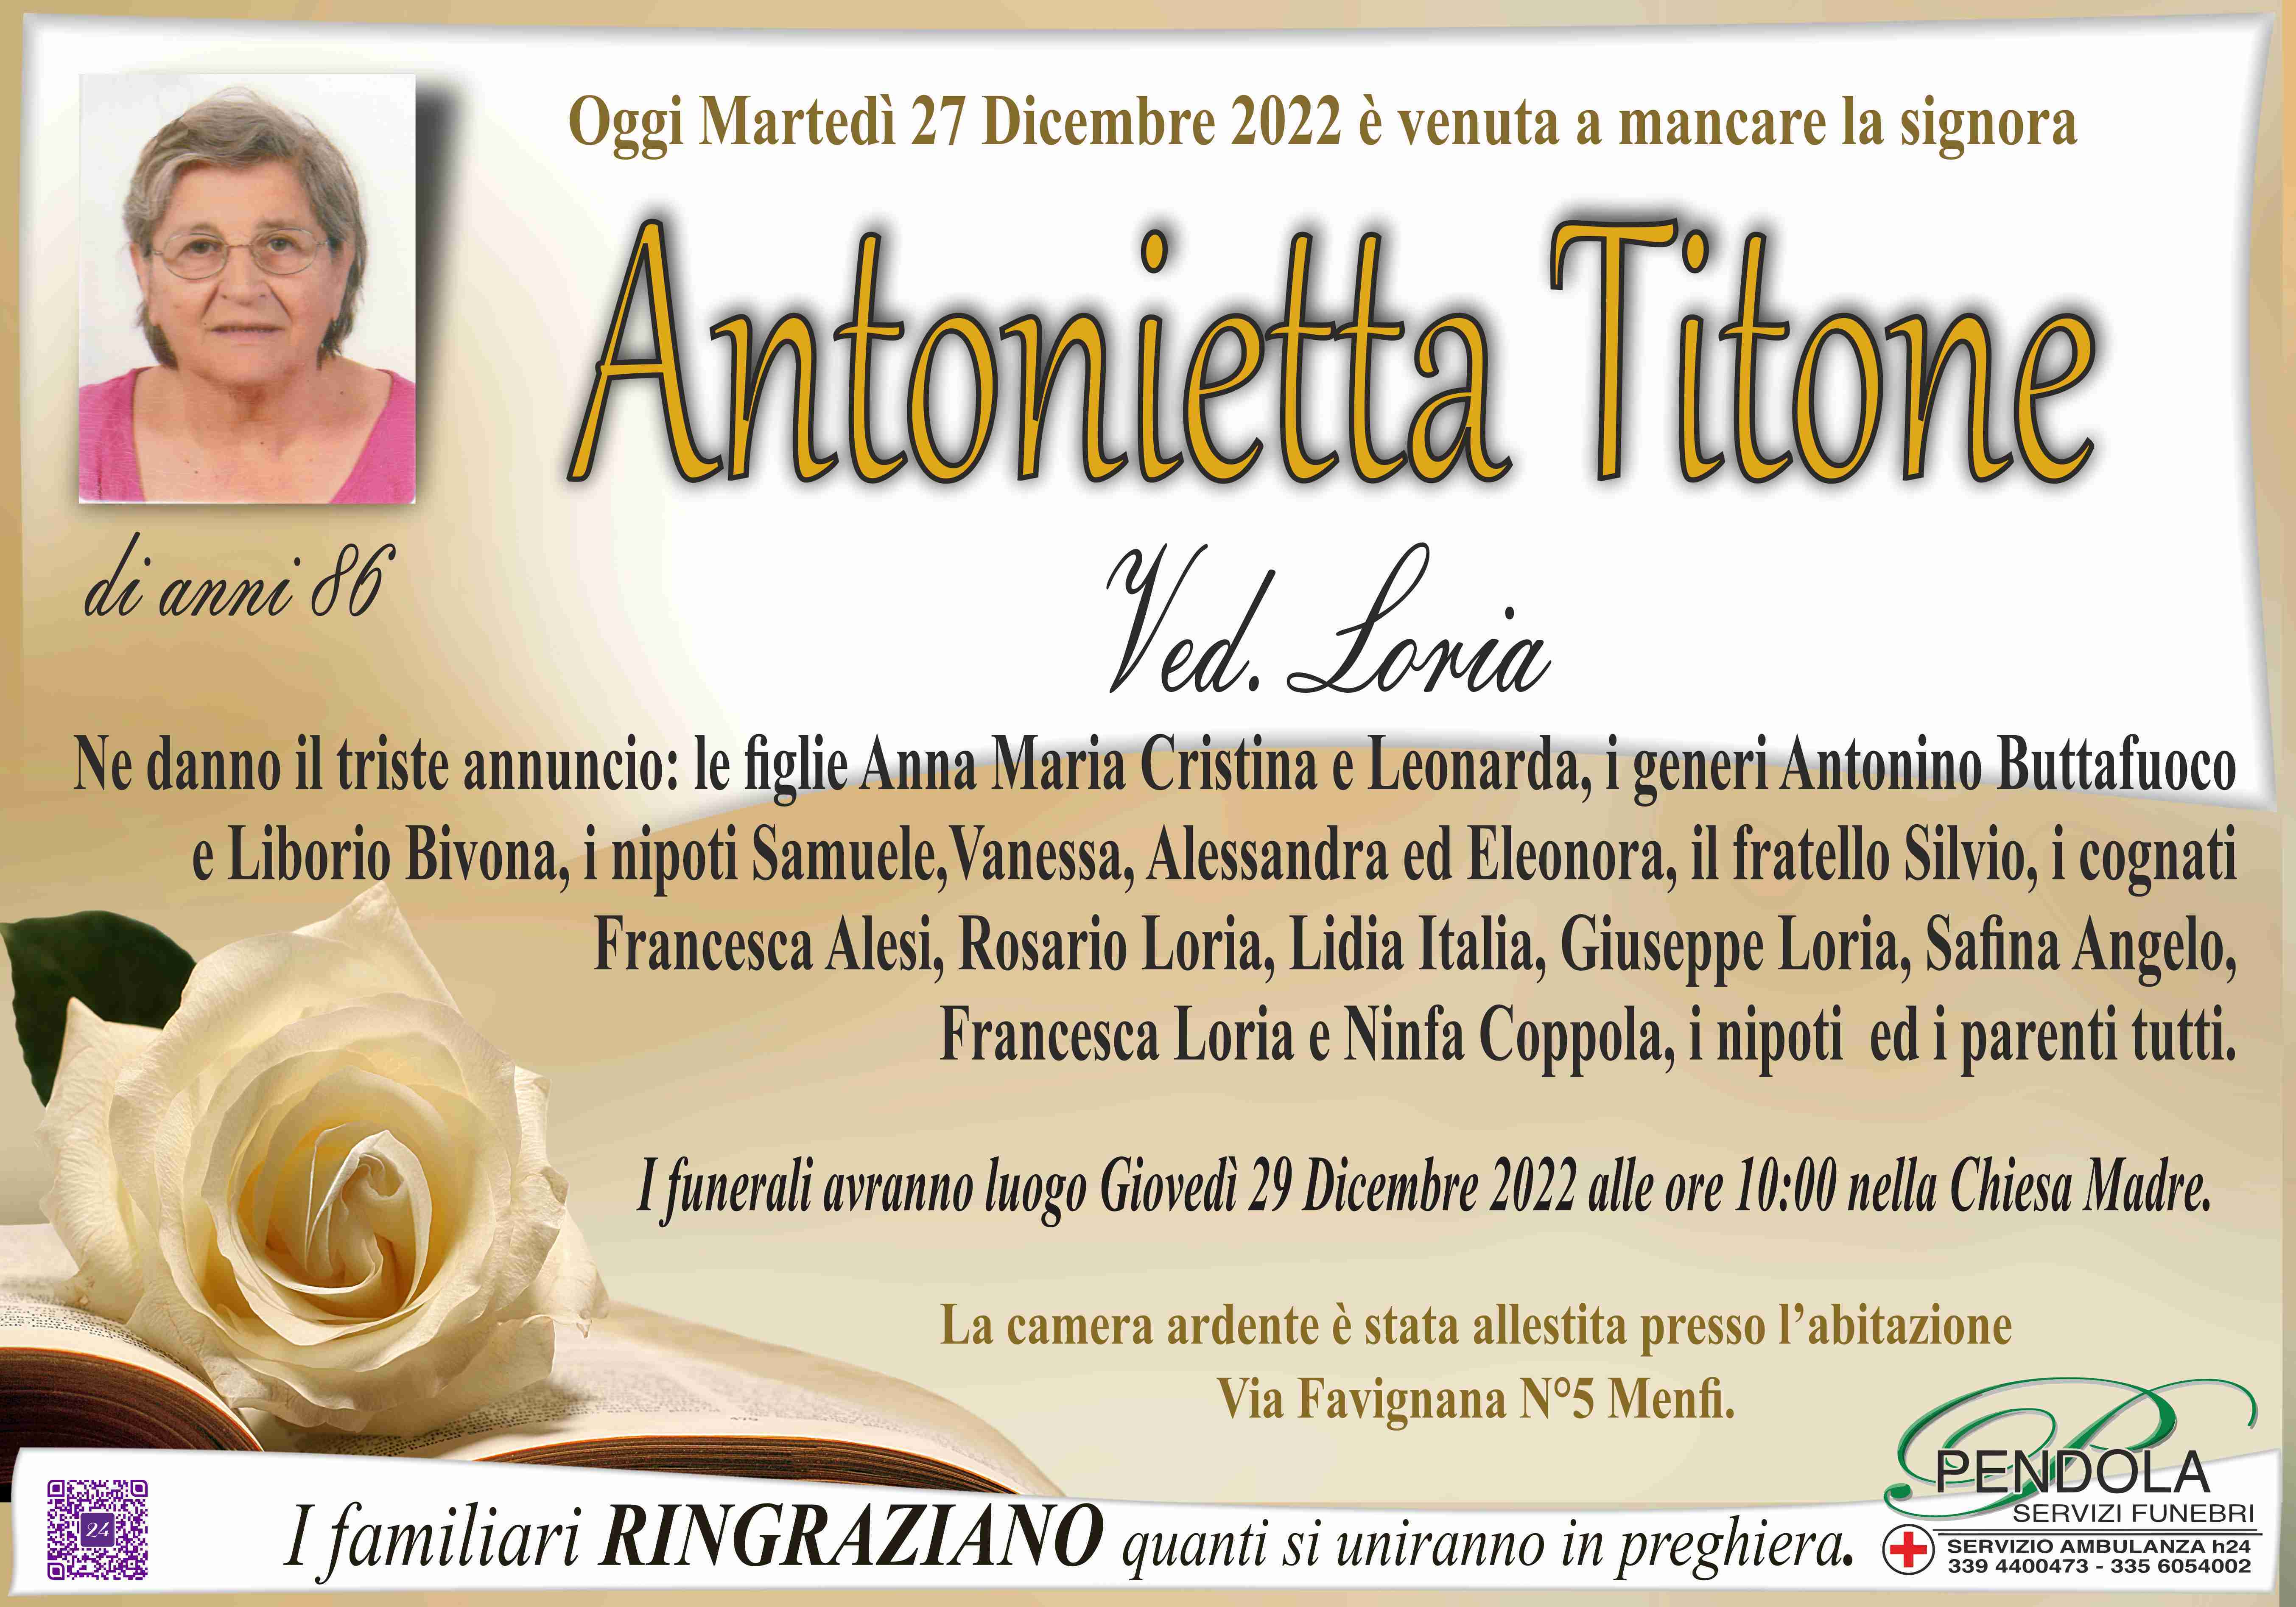 Antonietta Titone